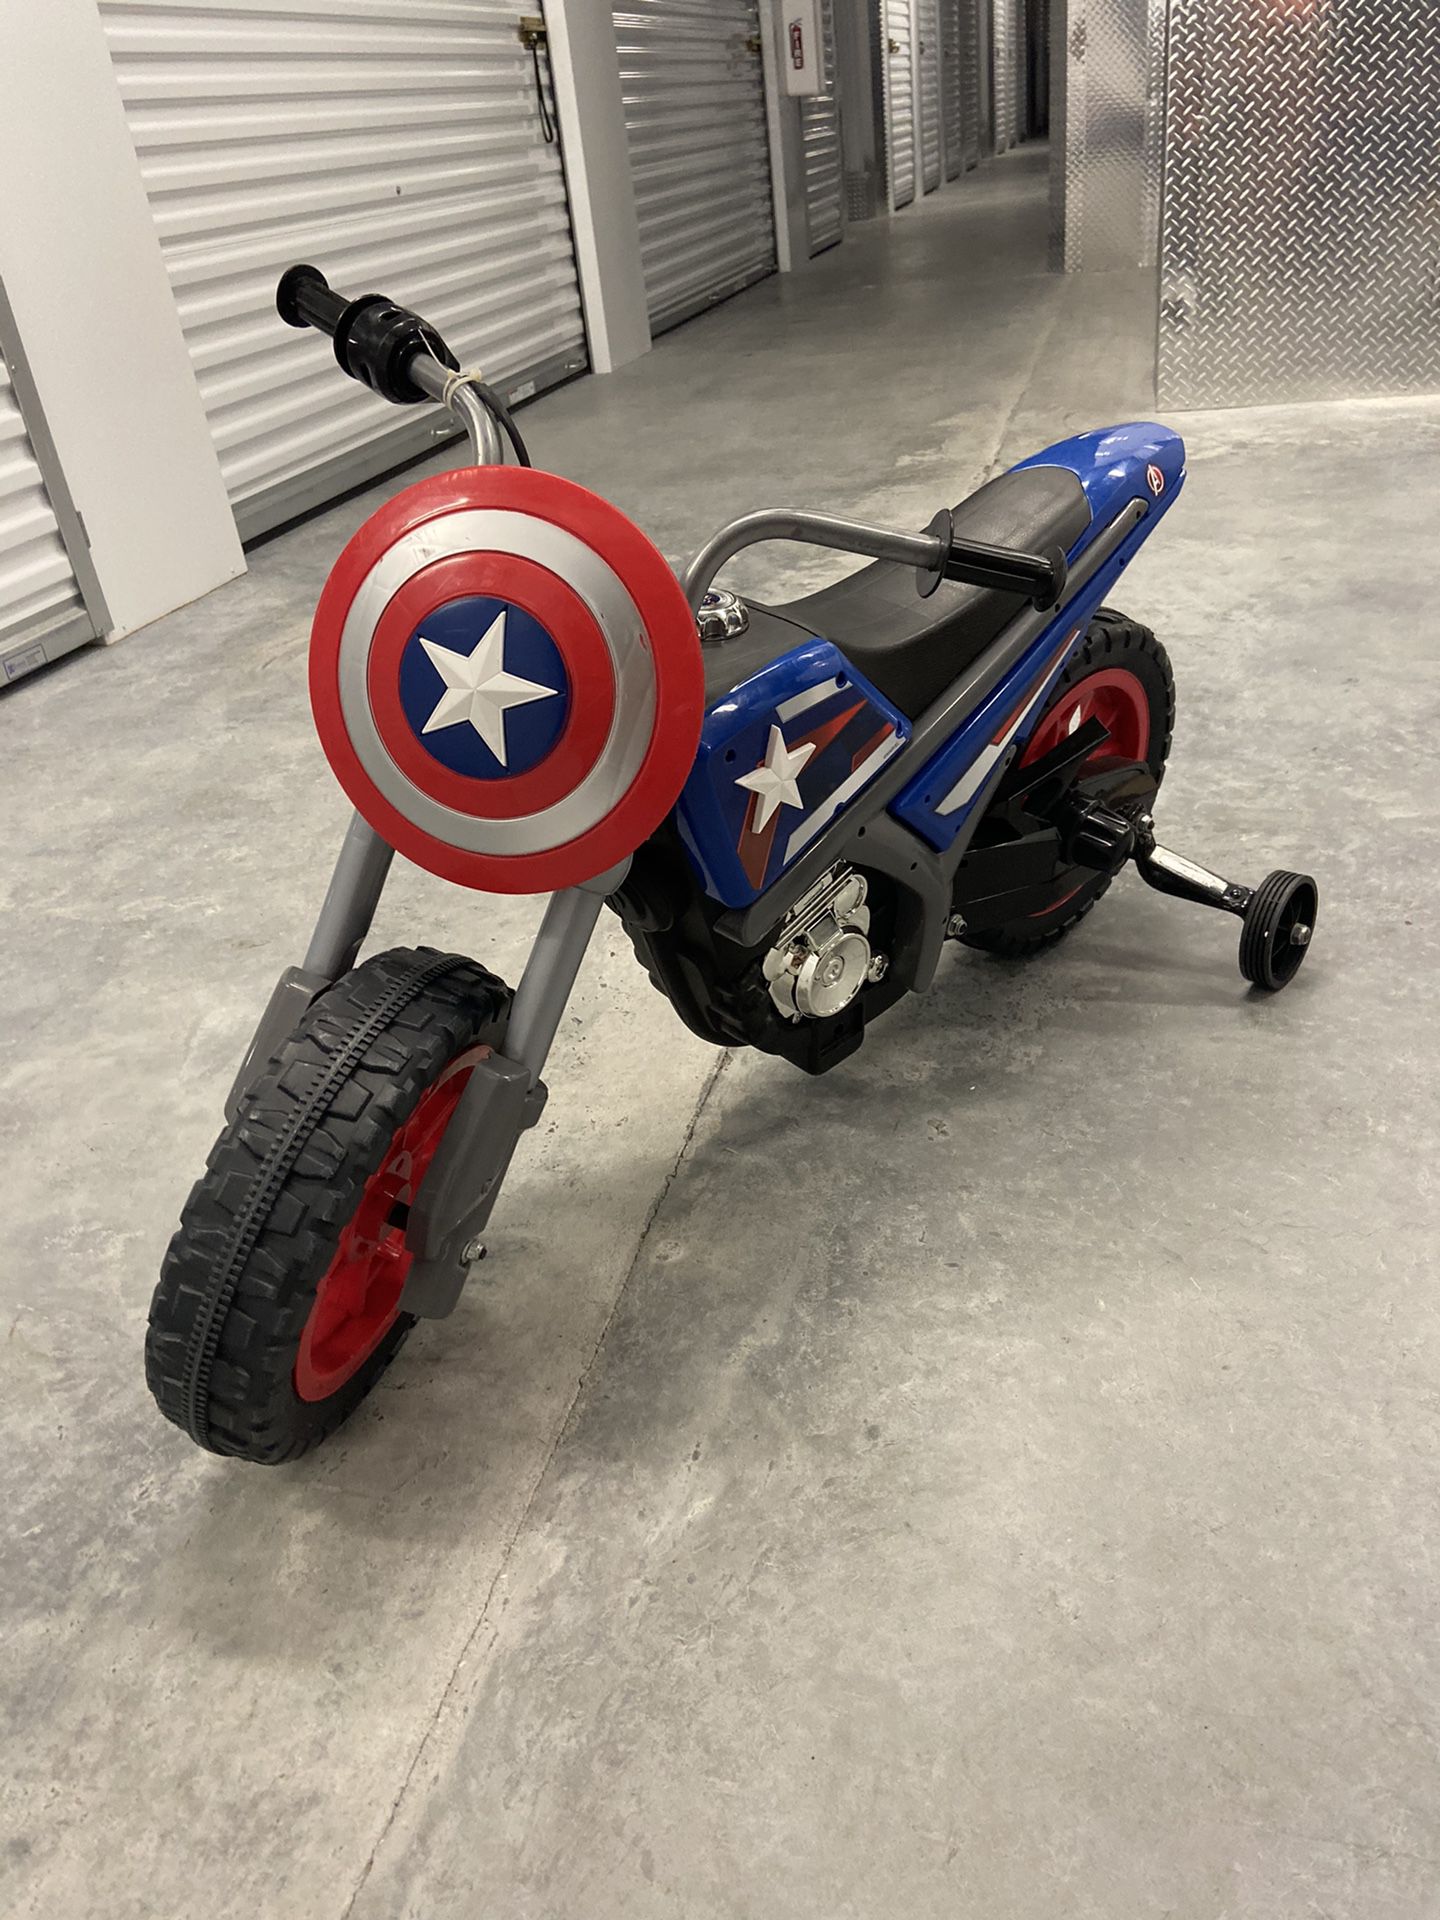 Captain America Power Wheels Motorcycle